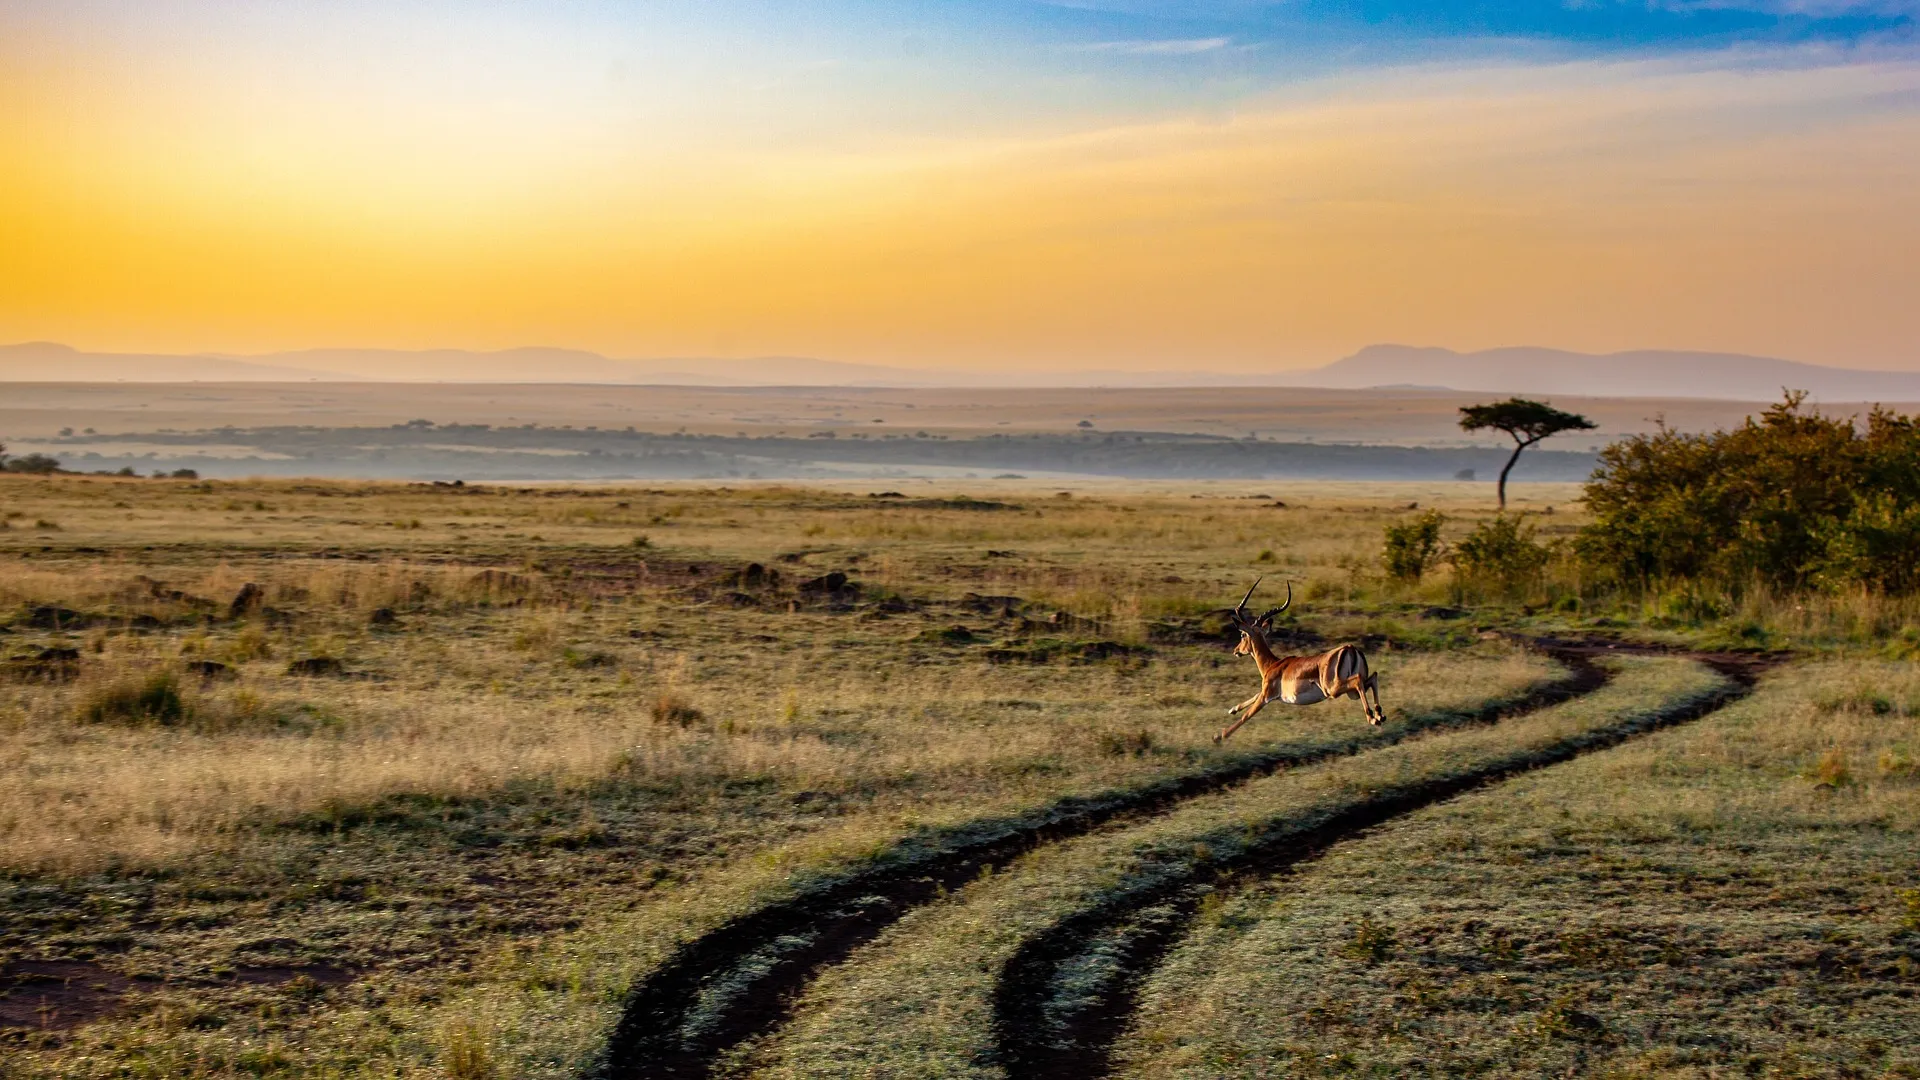 cheap kenya safari holidays - antelope